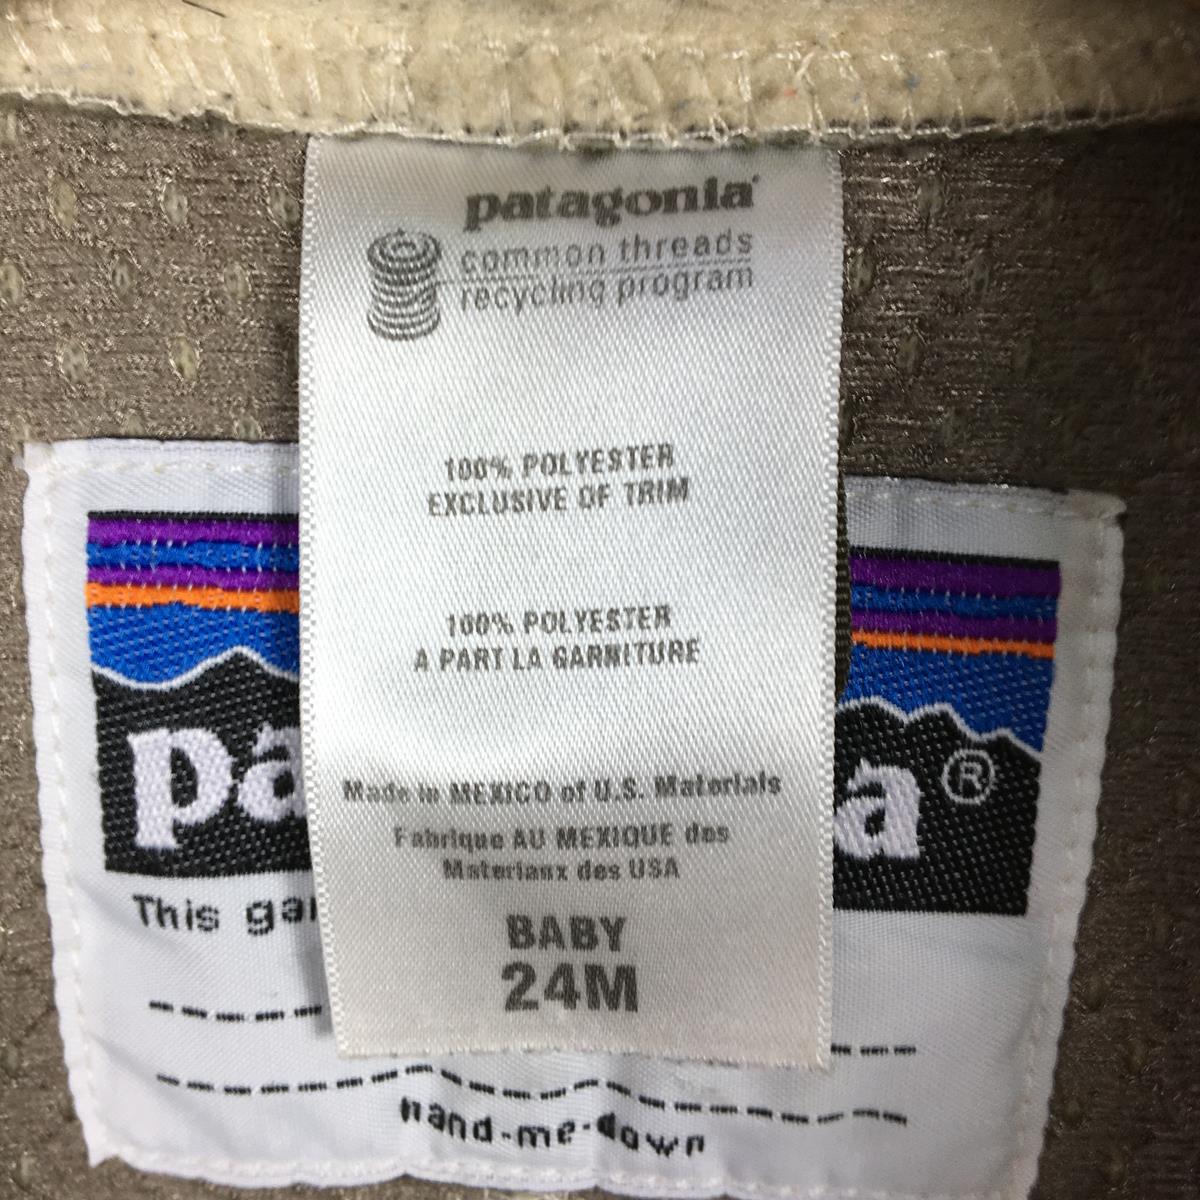 【Baby's 24M】 パタゴニア 2008 ベビー レトロ ベスト Baby Retro Vest パイル フリース デカタグ 初期タグ 復刻 生産終了モデル 入手困難 PATAGONIA 61010 NWM Natural / Brown アイボリー系